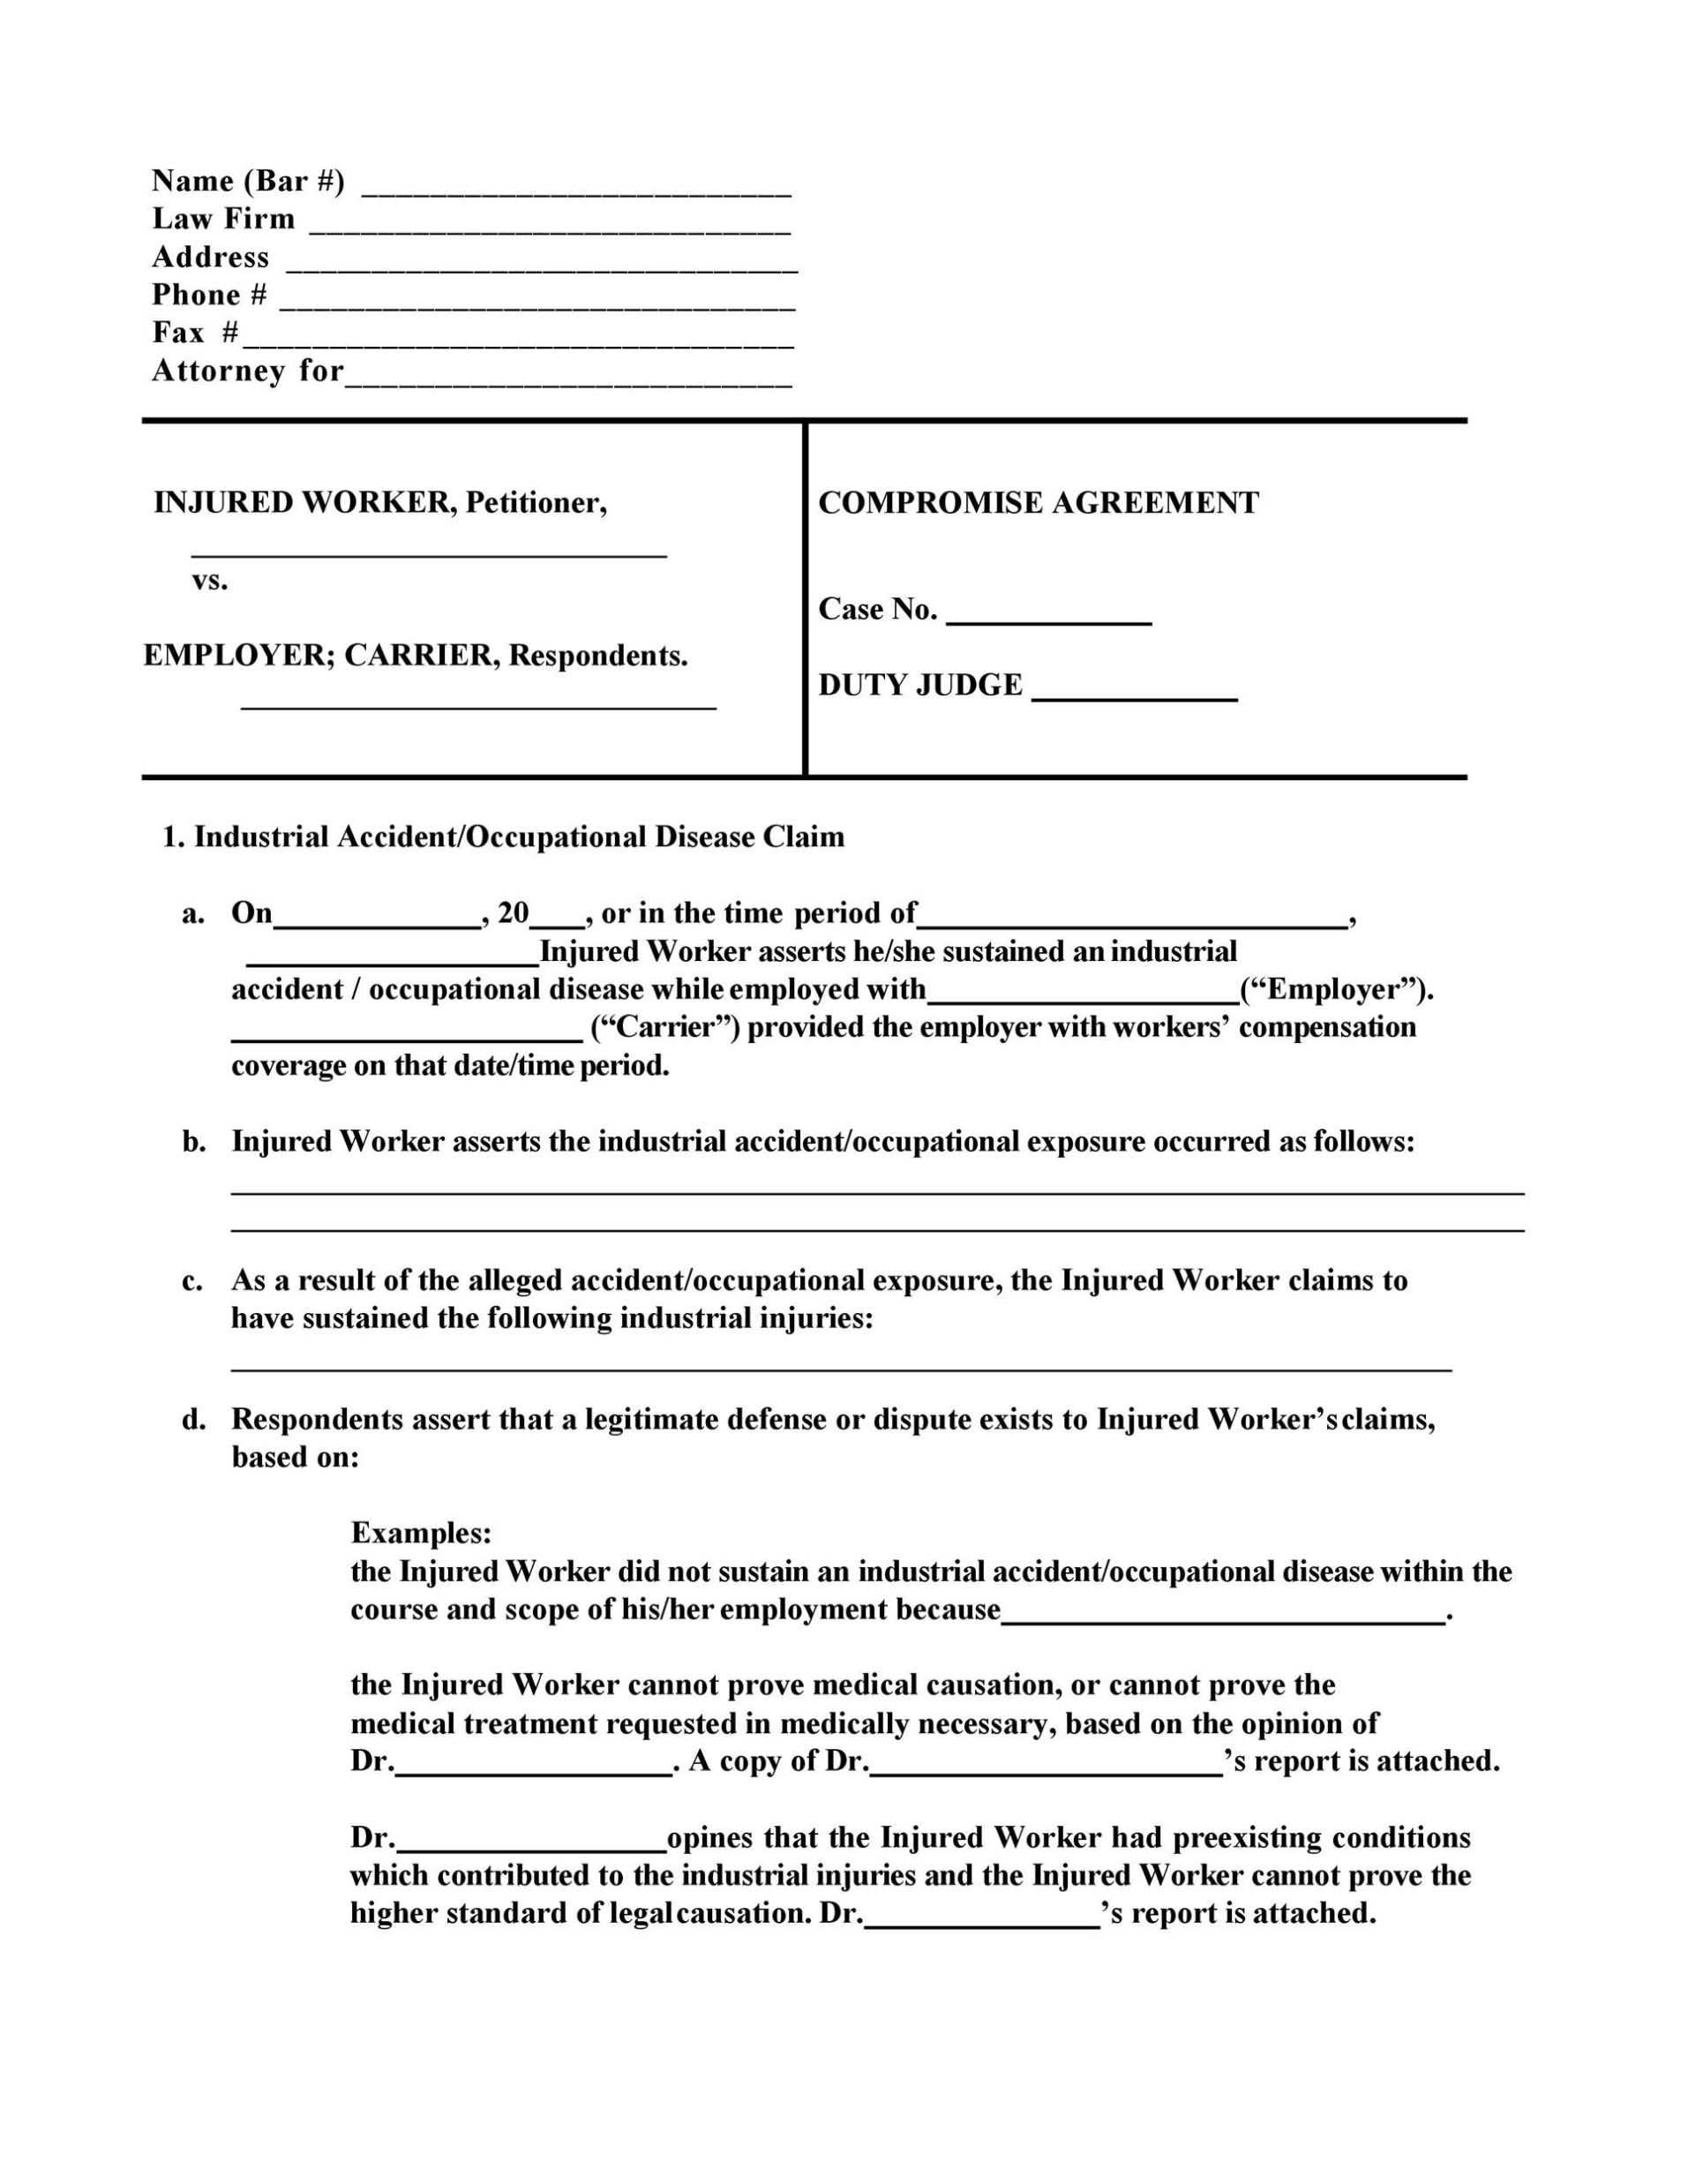 43 Free Settlement Agreement Templates [Divorce/Debt/Employment..] With Property Settlement Agreement Sample